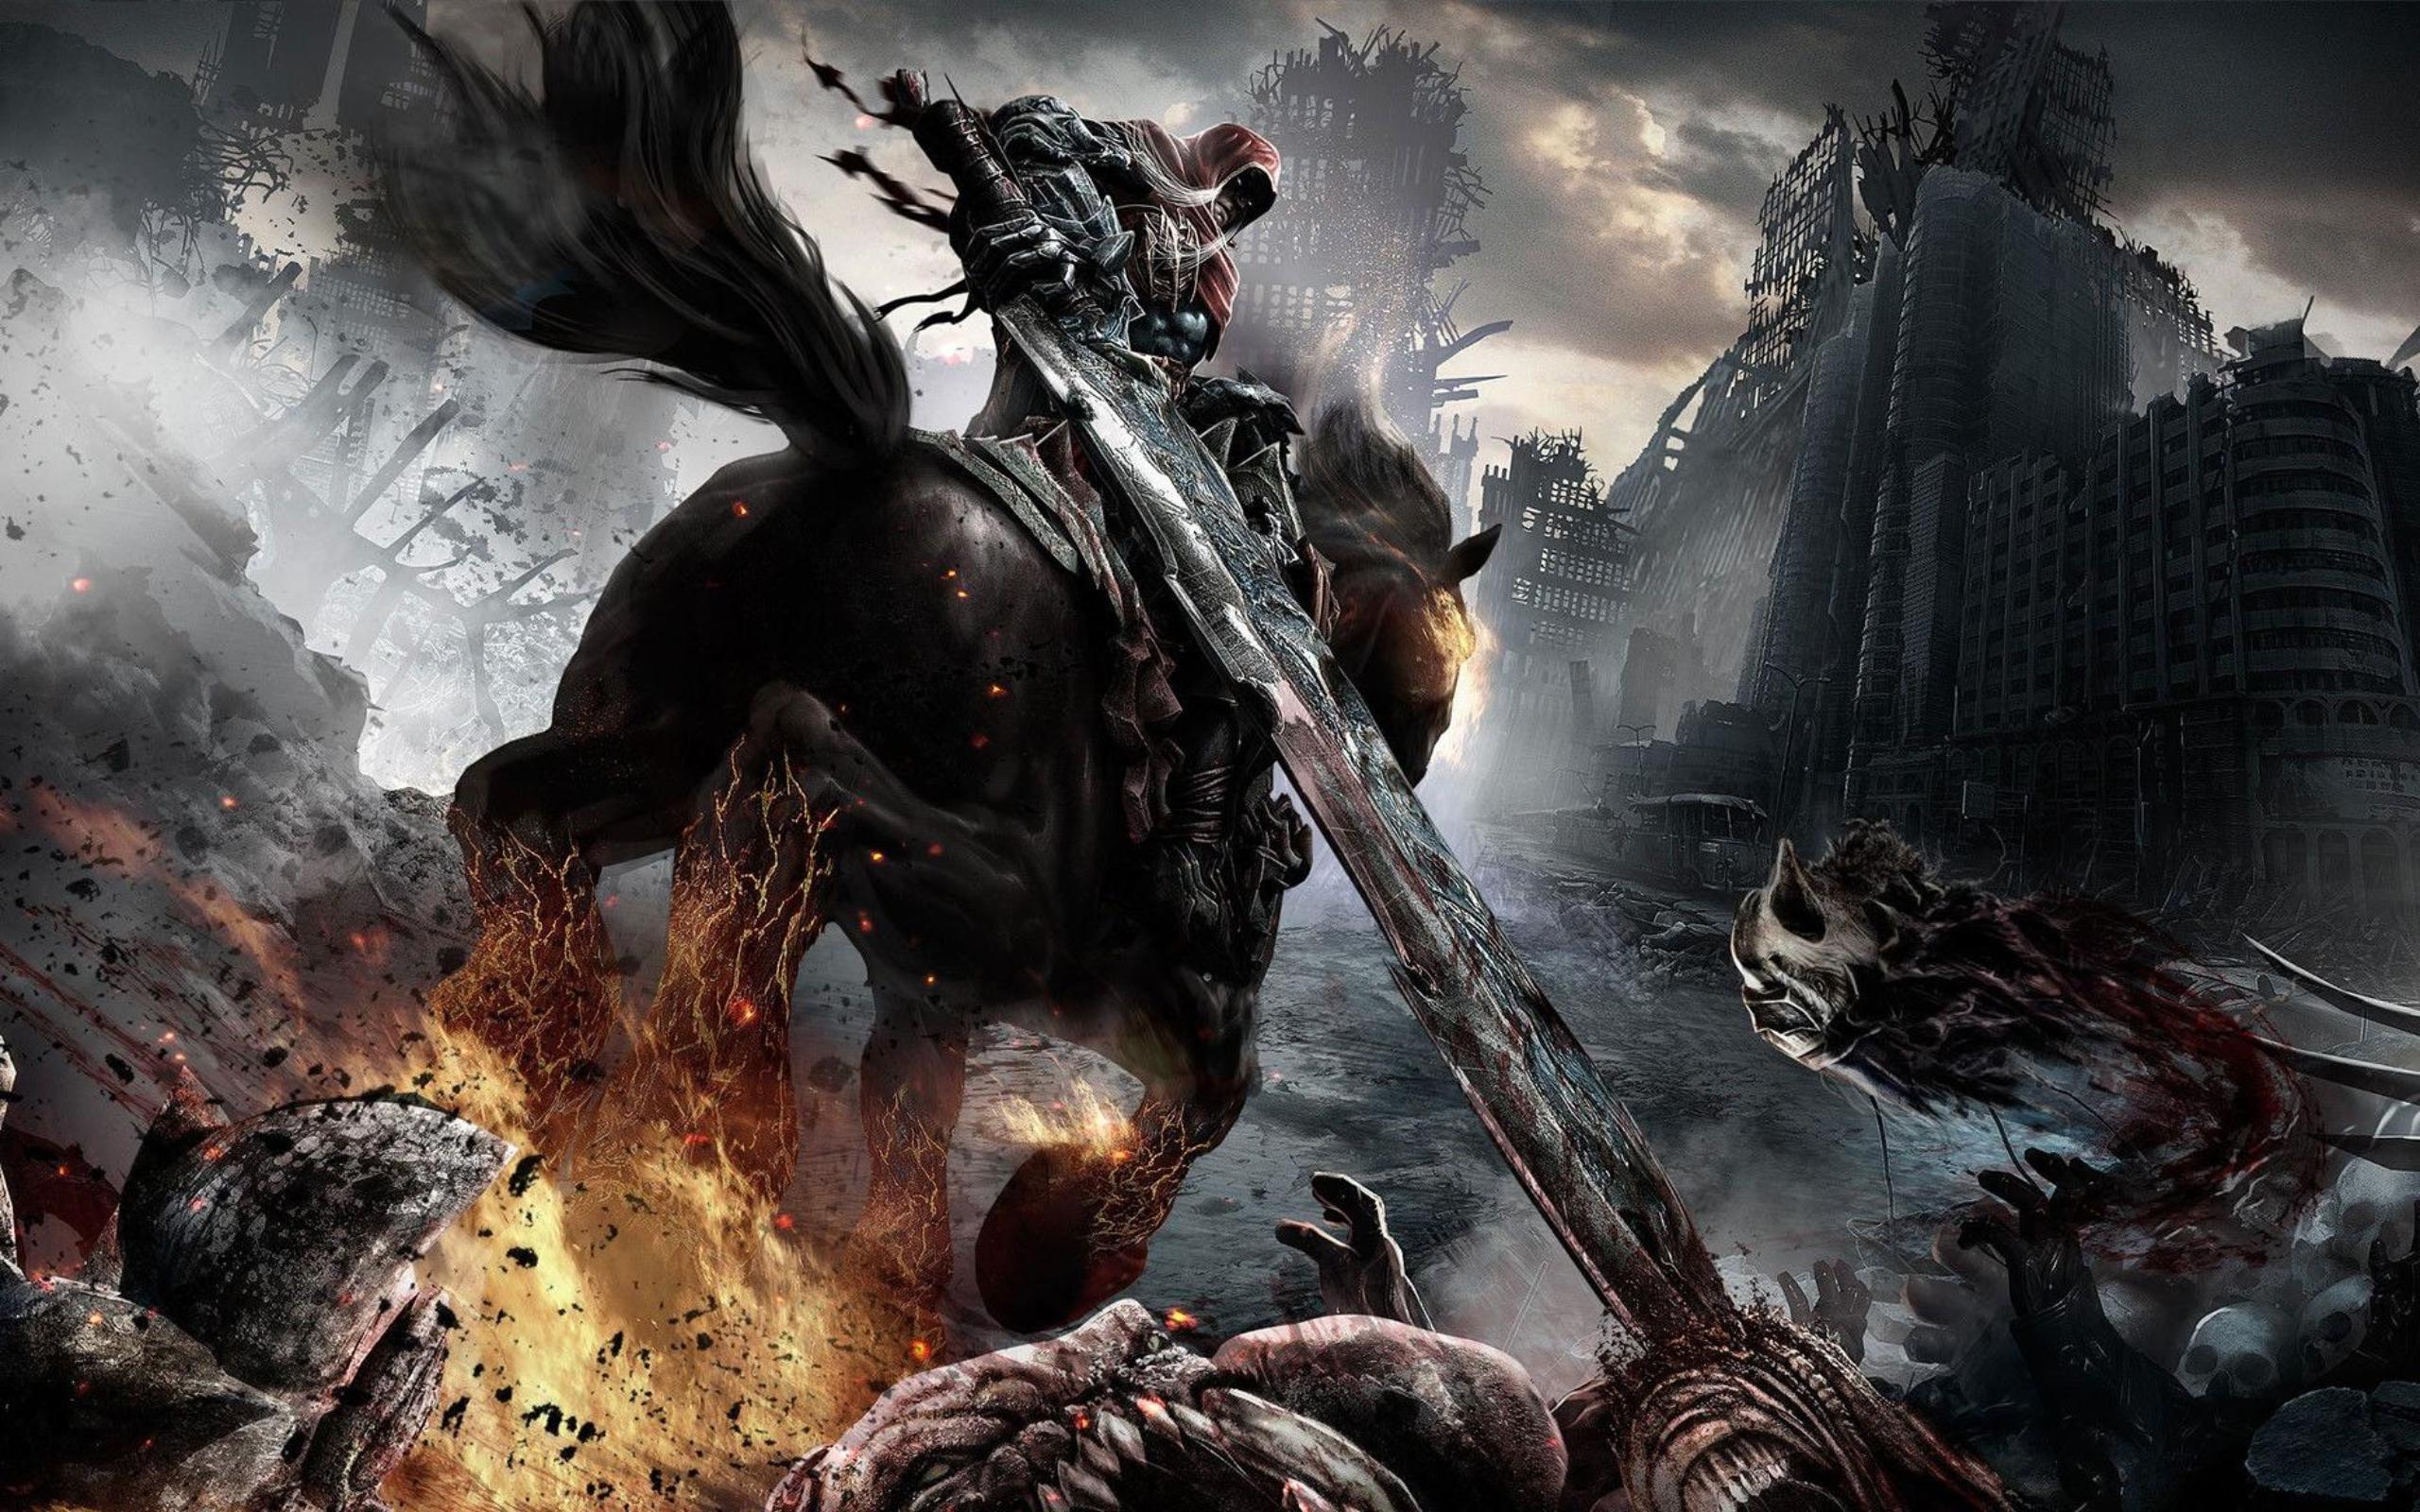 War, the protagonist of Darksiders, wields his mighty blade against otherworldly enemies.